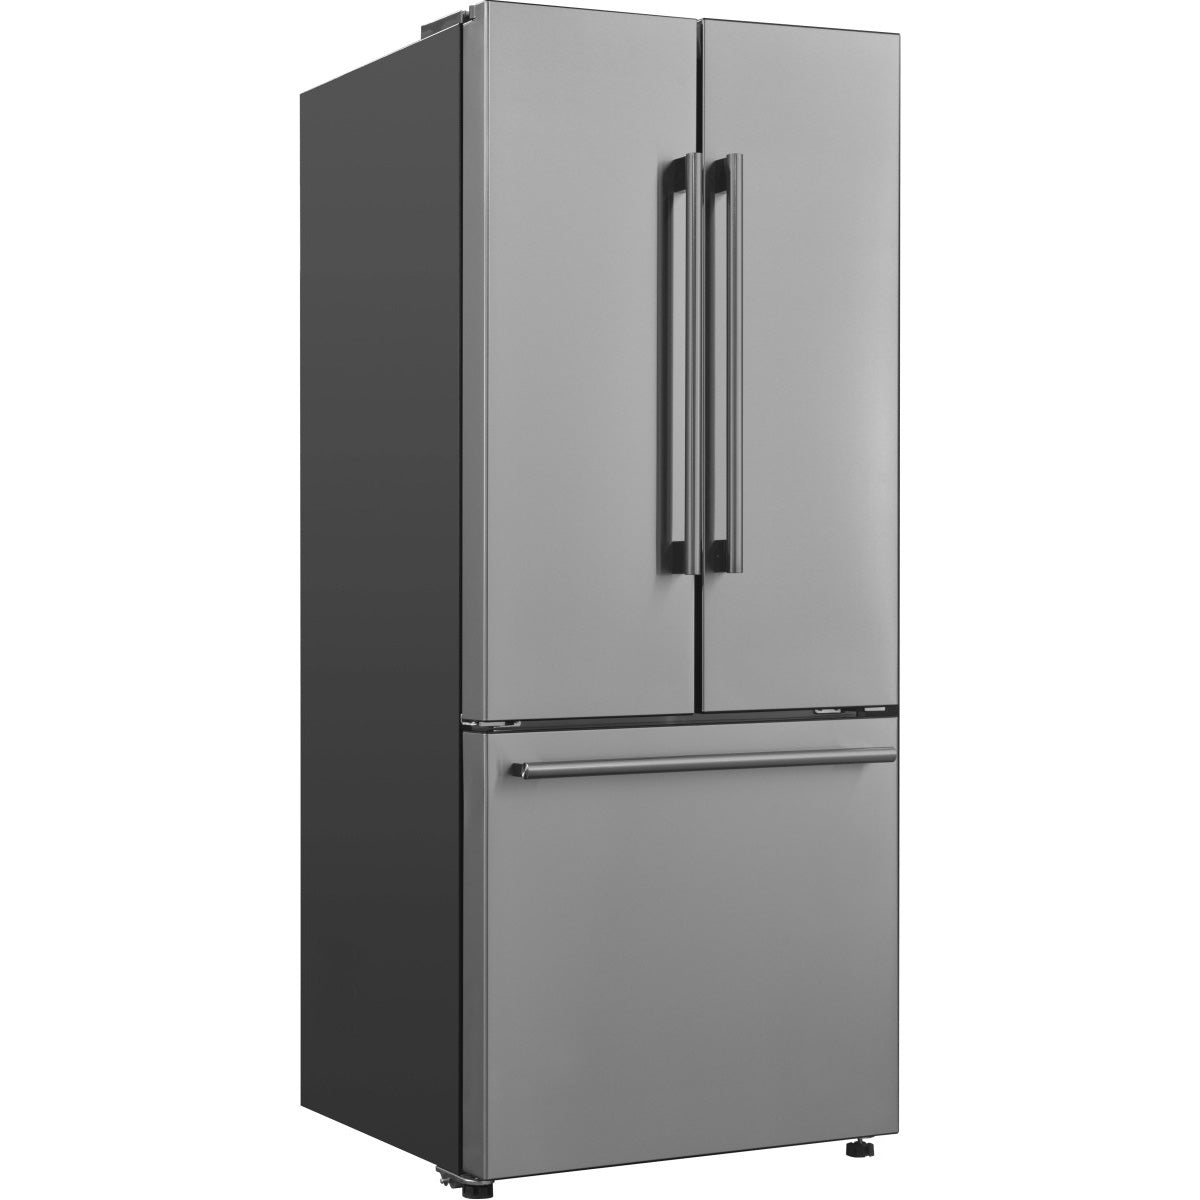 Galanz 28 in. 16 Cu. Ft. 3-Door French Door Refrigerator In Stainless Steel (GLR16FS2E16) side